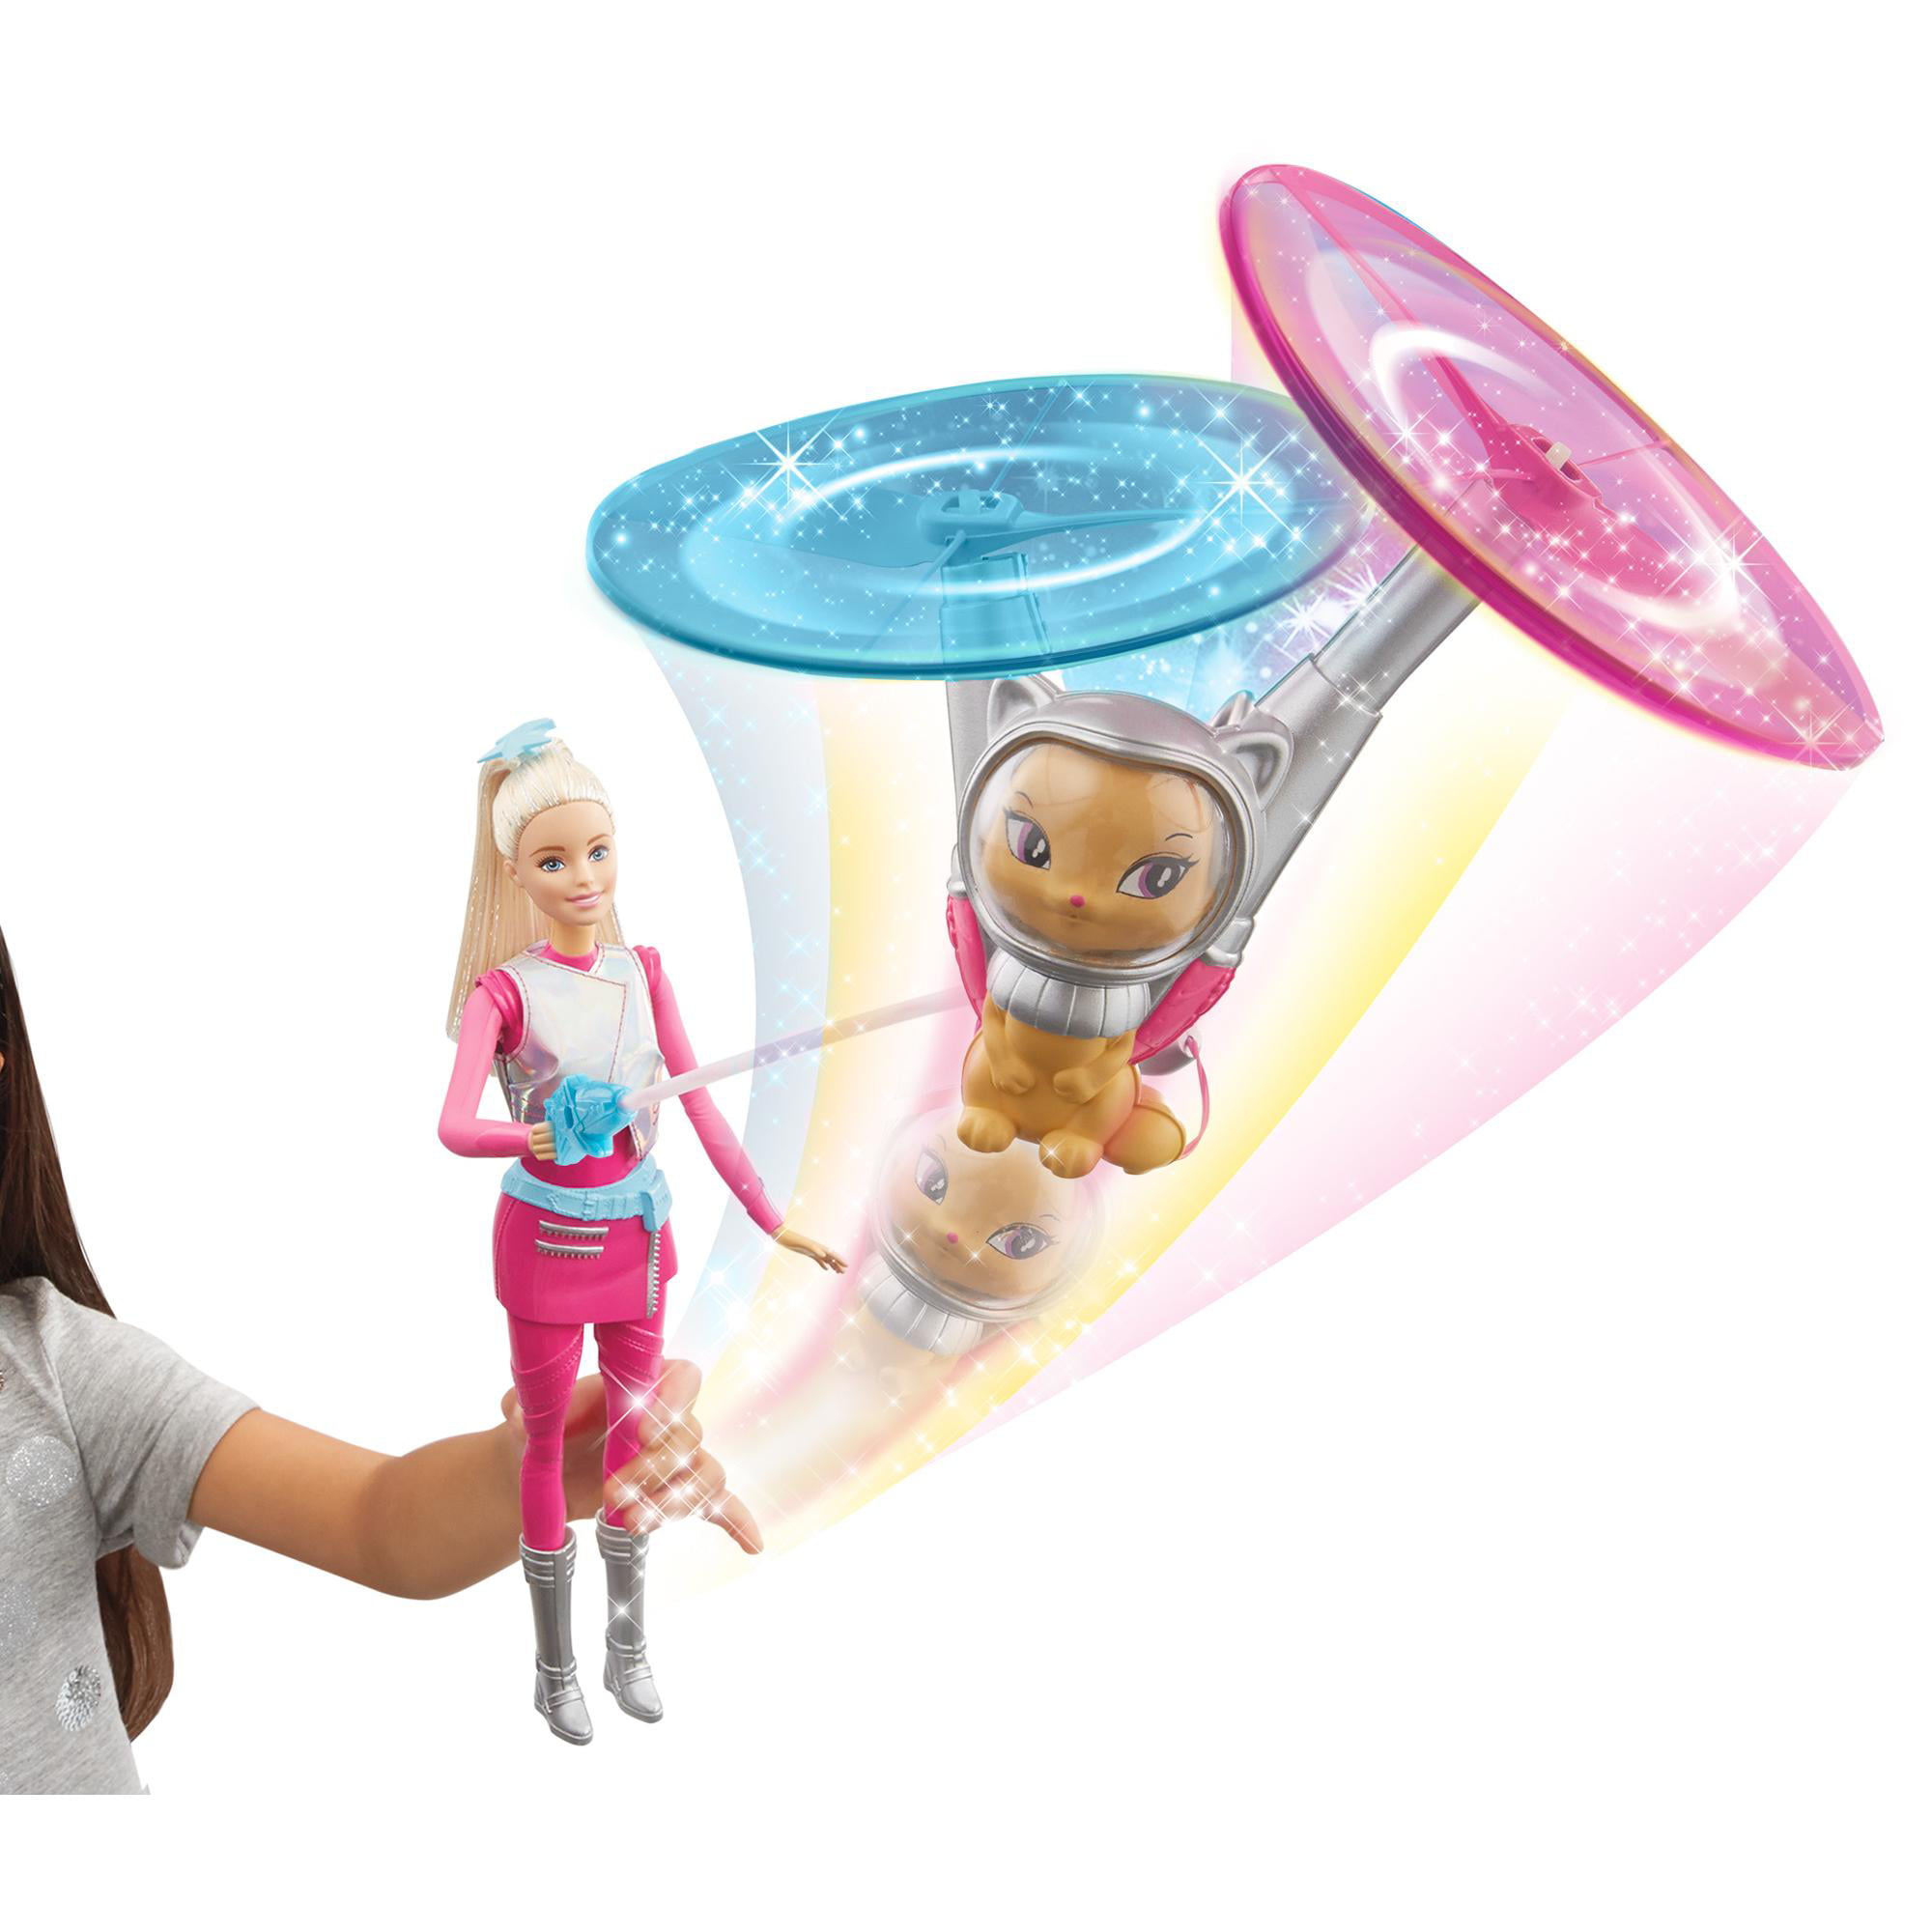 Barbie Star Light Adventure Galaxy Doll and Flying Walmart.com